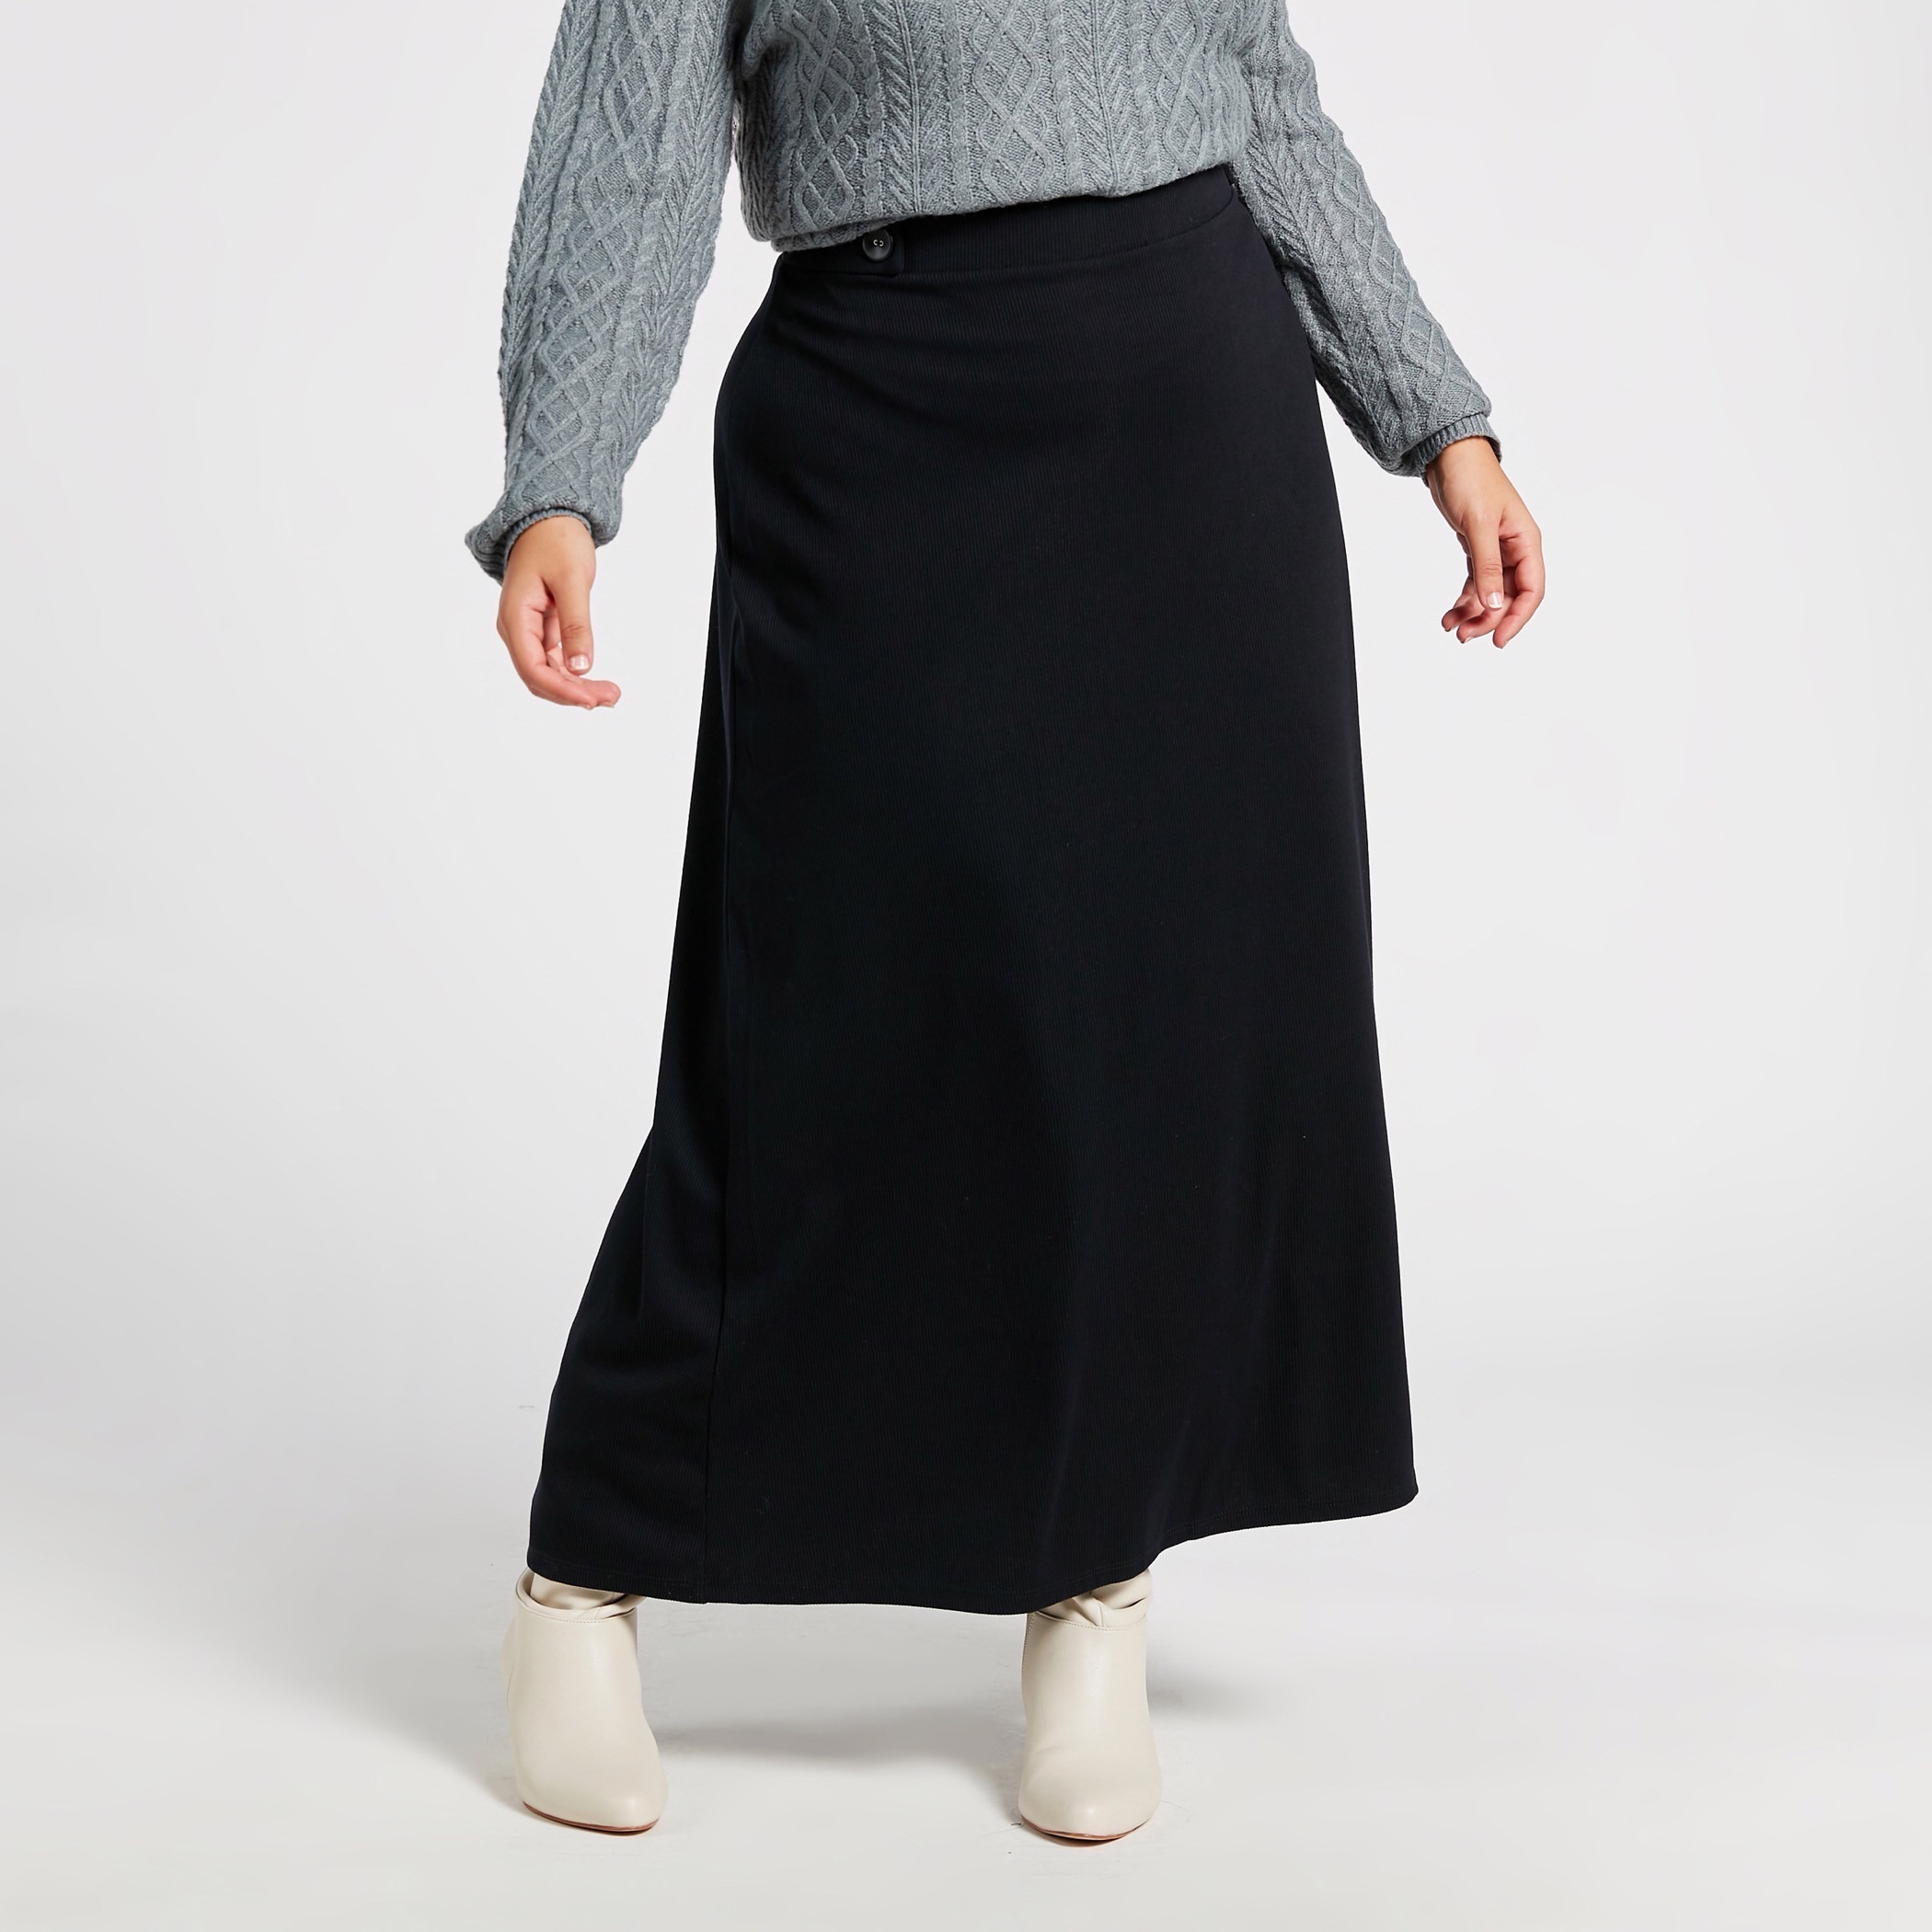 B 4441 sewing pattern 70's A-line SKIRT, TOP w/ Raglan sleeves PANTS sew  size 16 | eBay